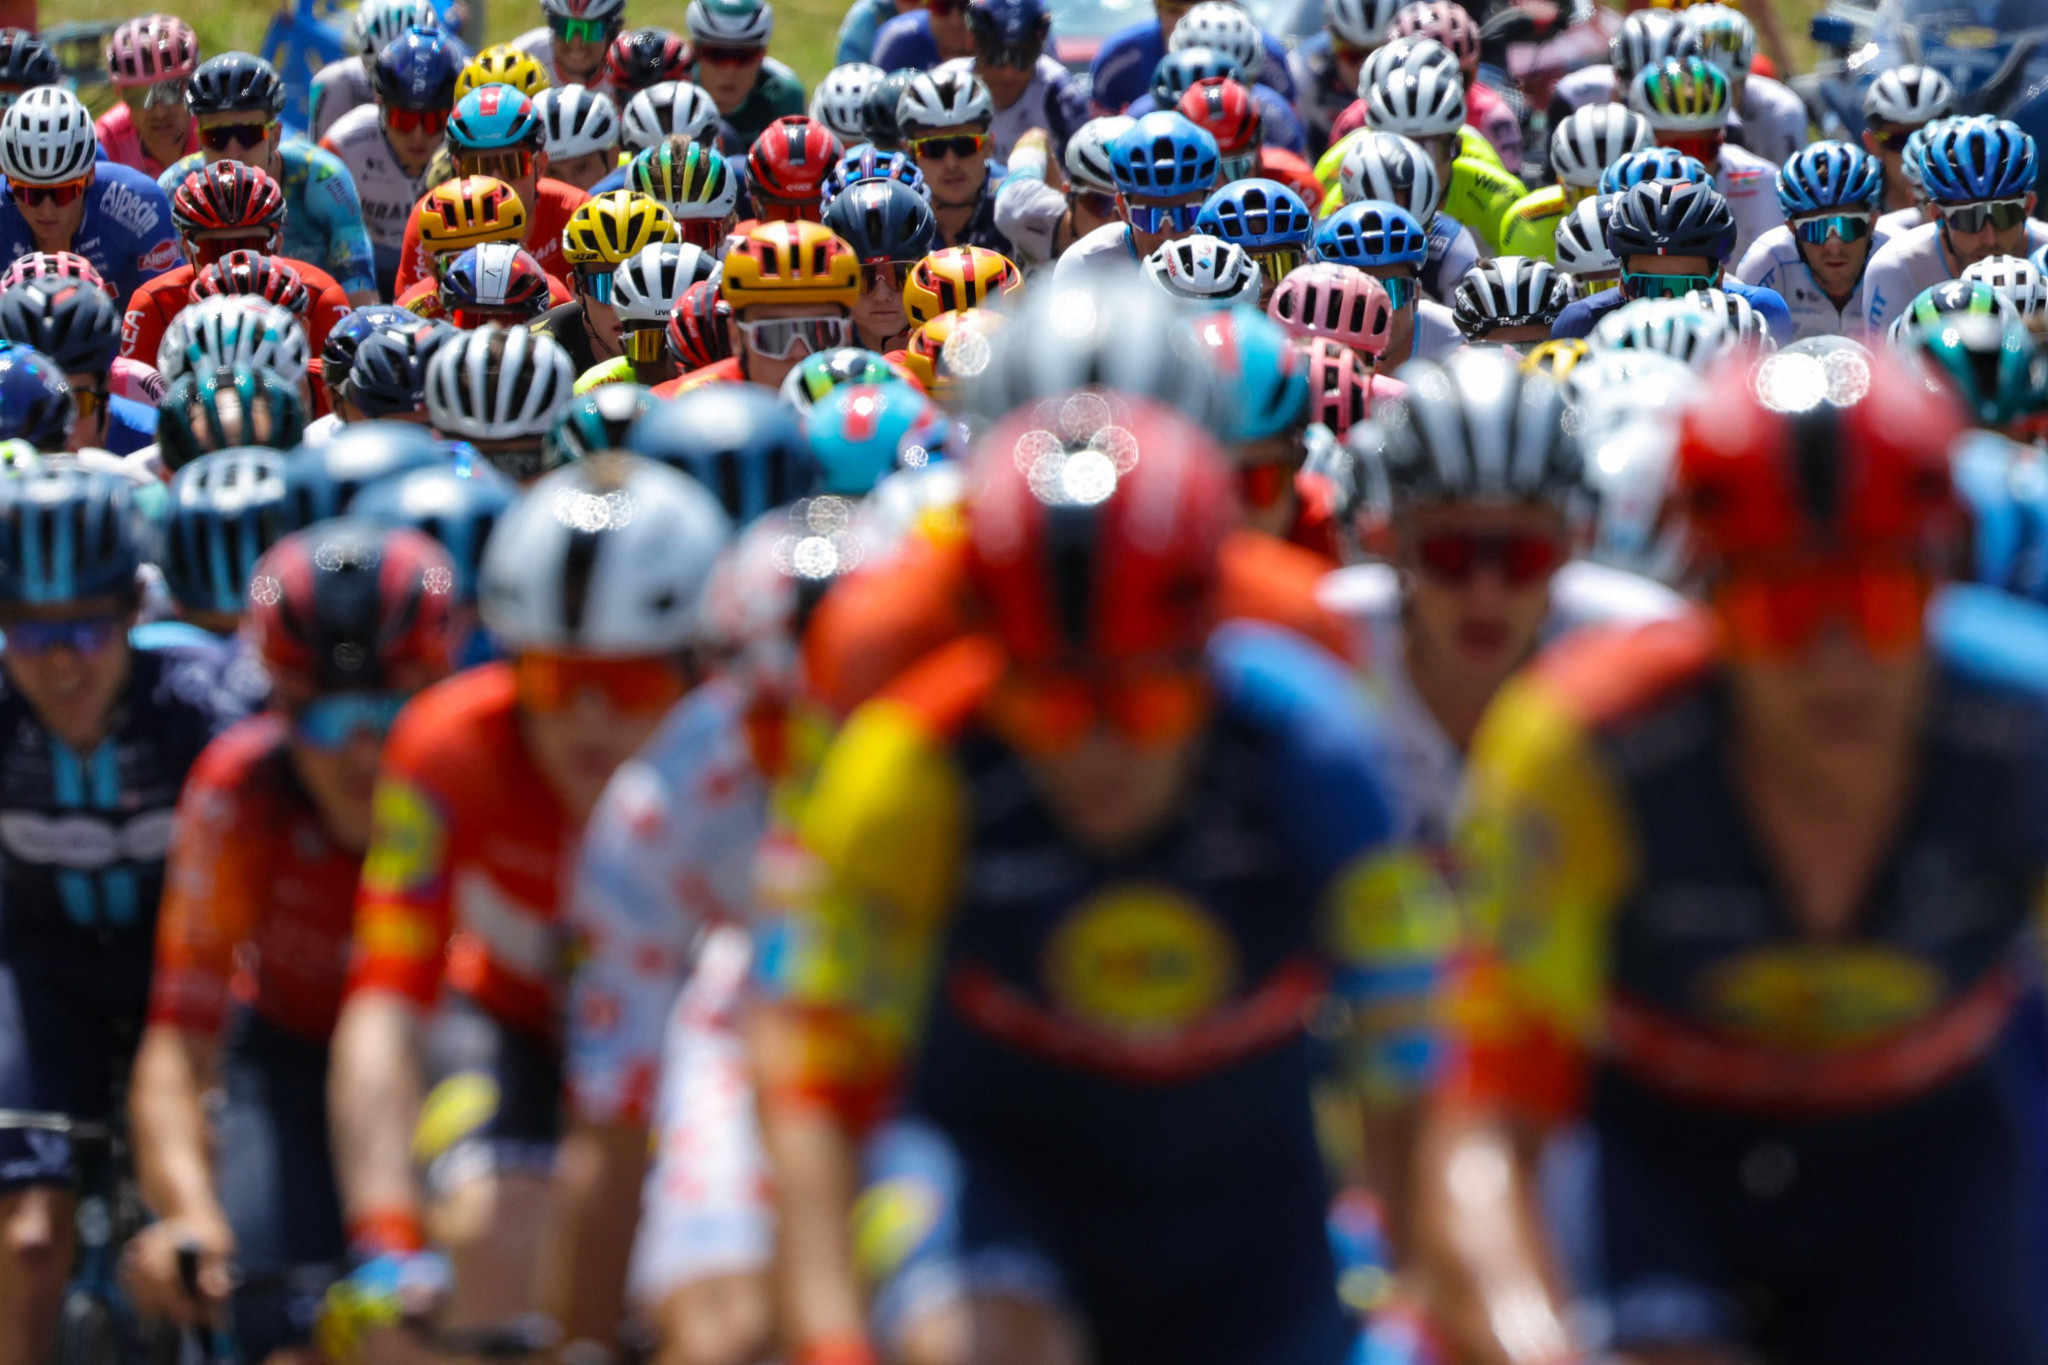 No technological fraud detected at 2023 Tour de France, UCI reveals 